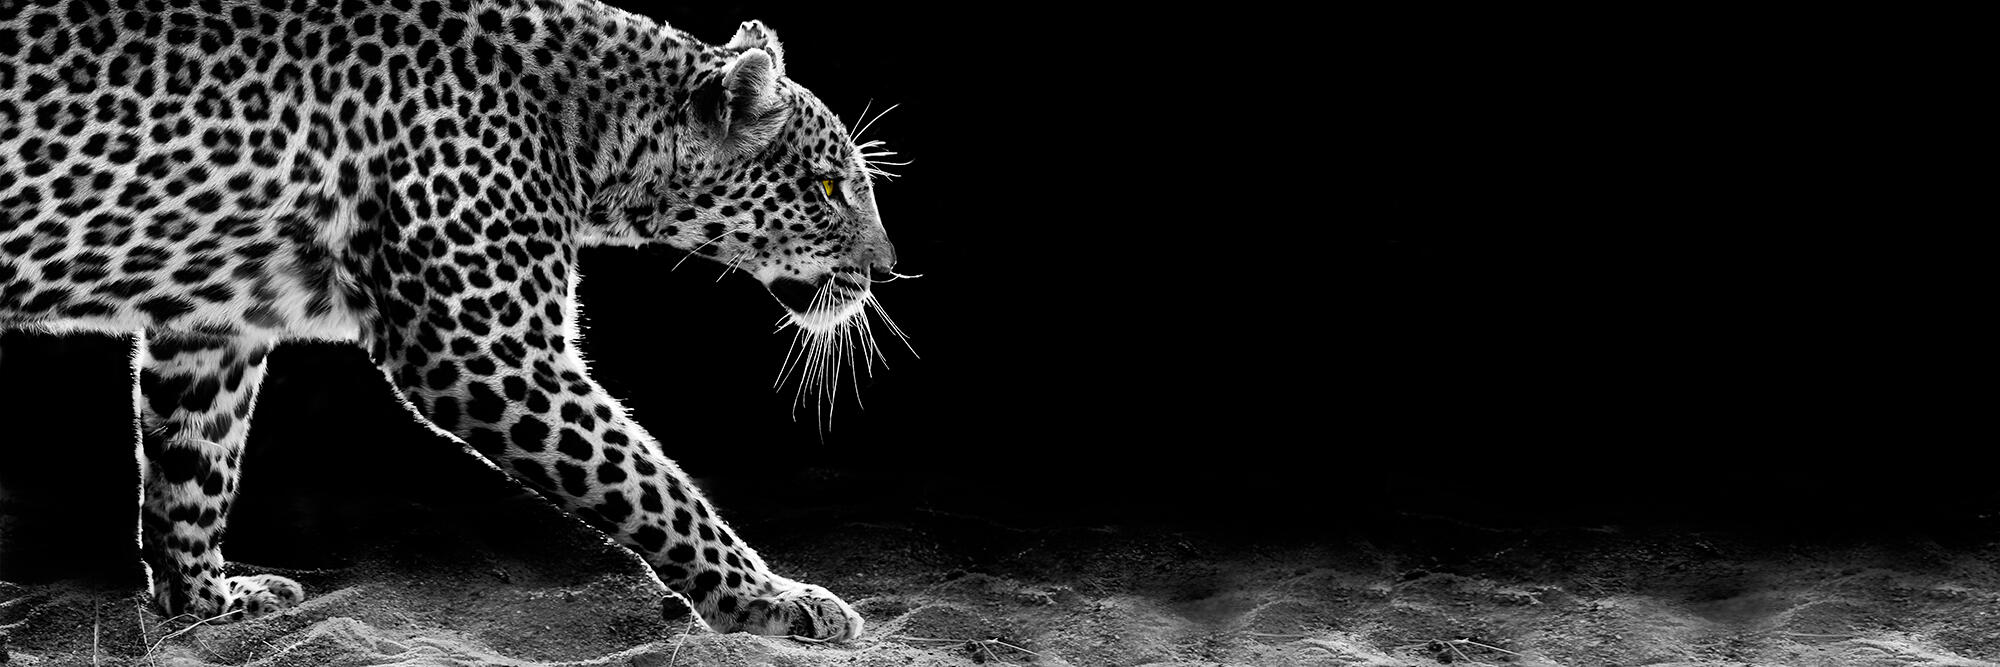 Canvas impreso leopardo 50 x 150 cm